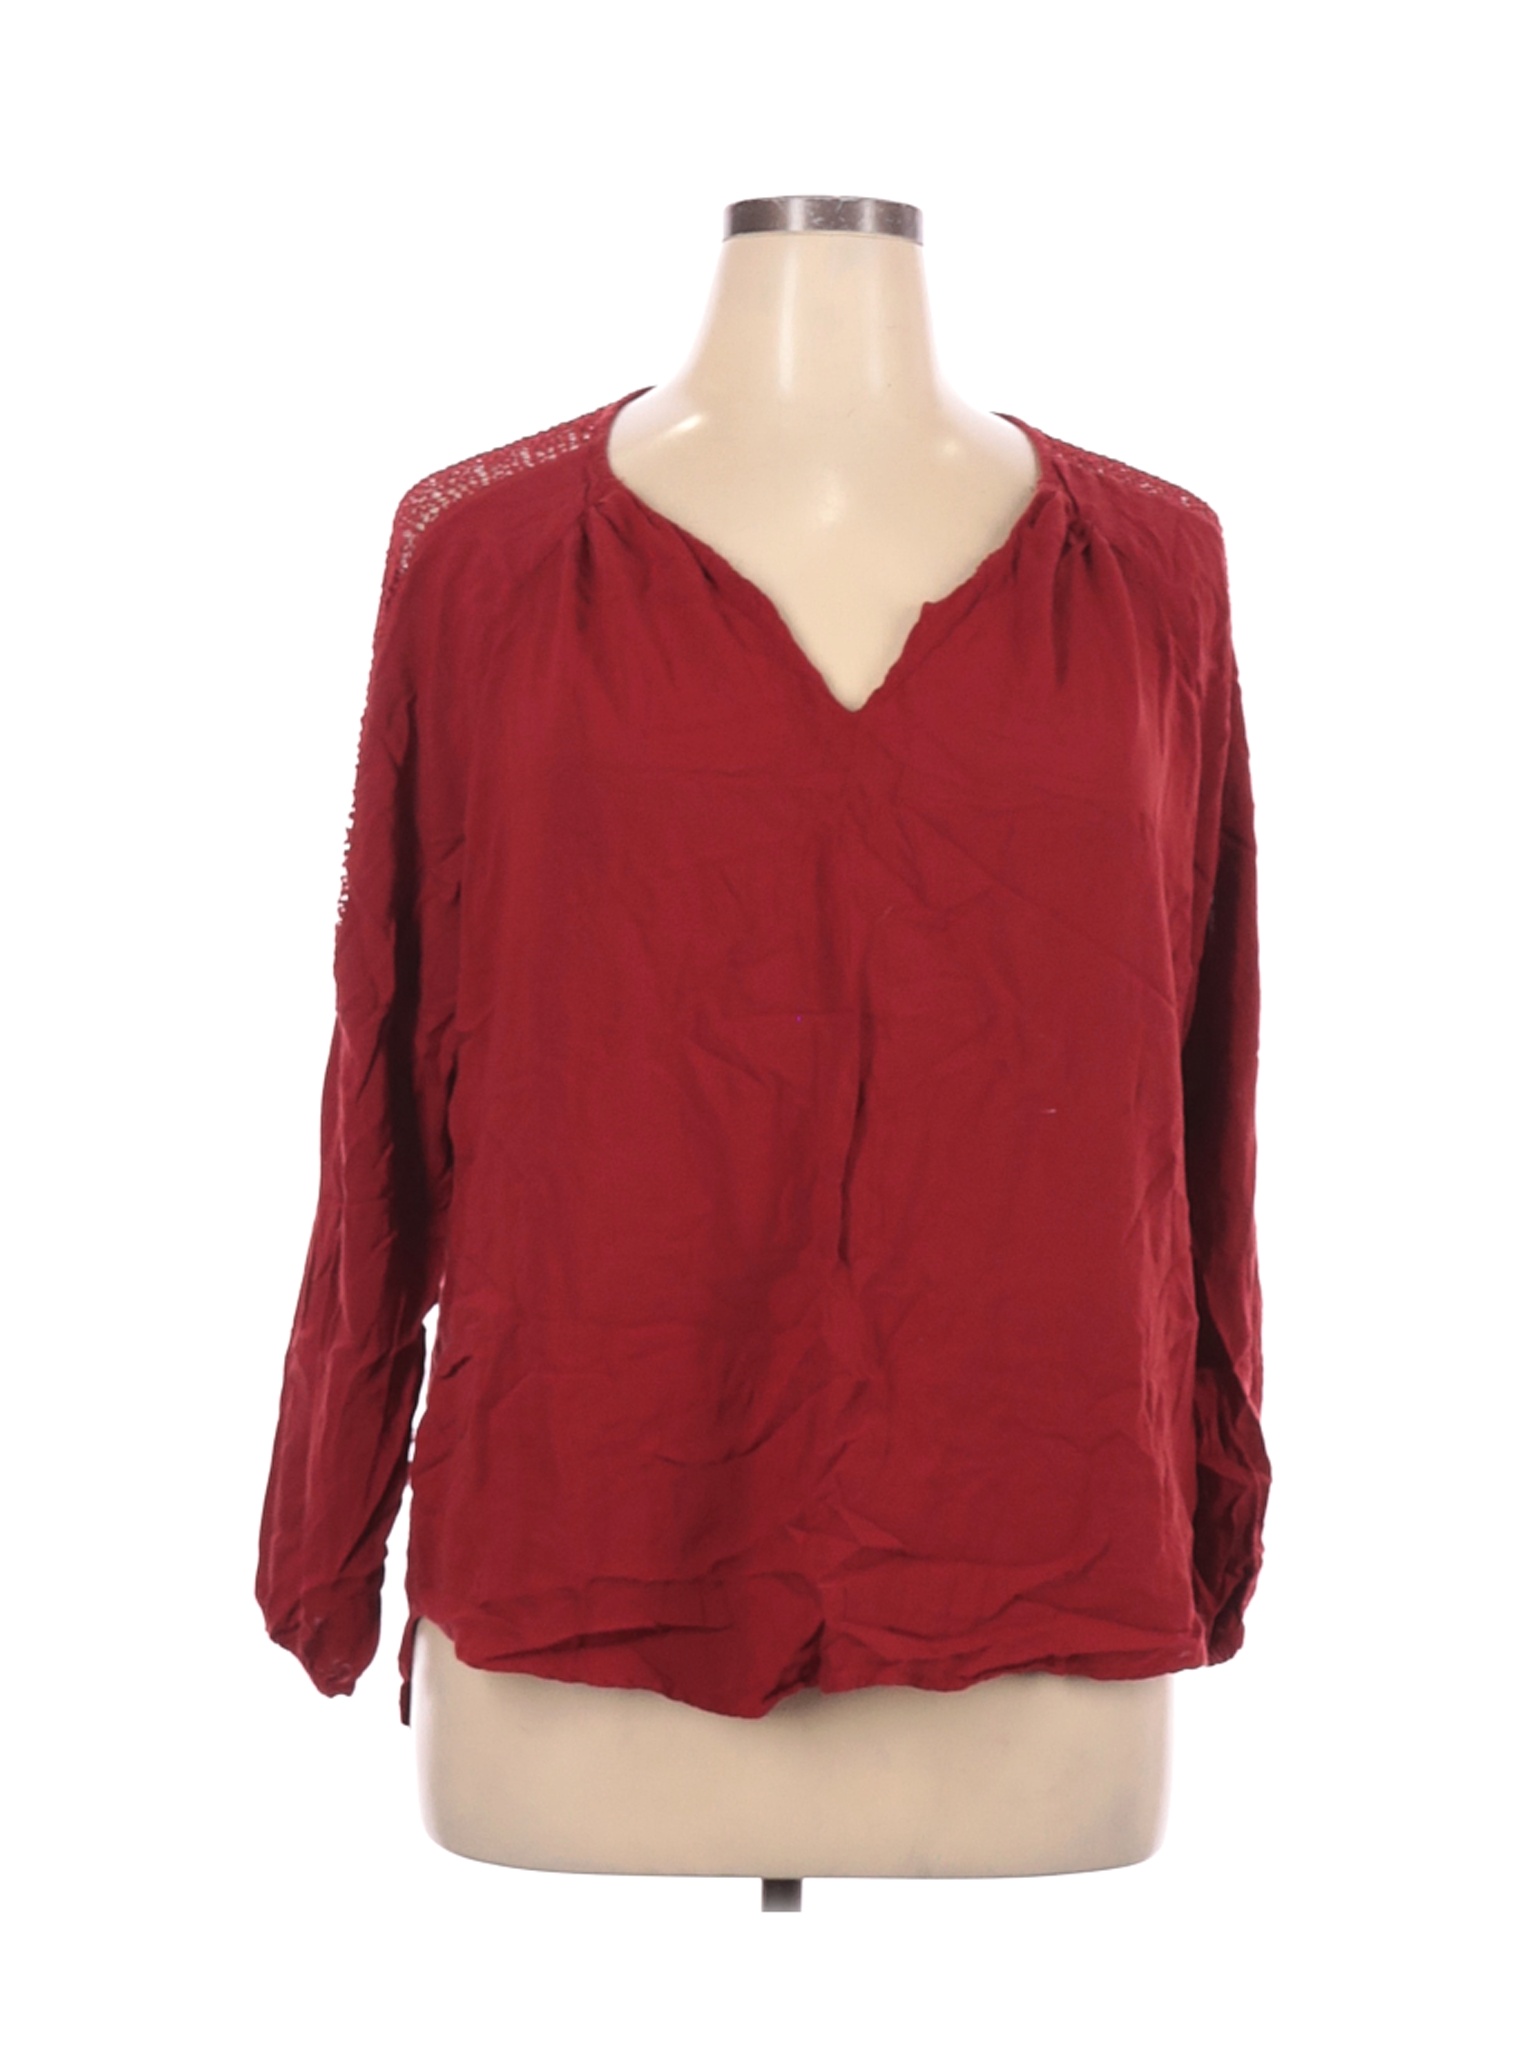 Old Navy Women Red 3/4 Sleeve Blouse XL | eBay